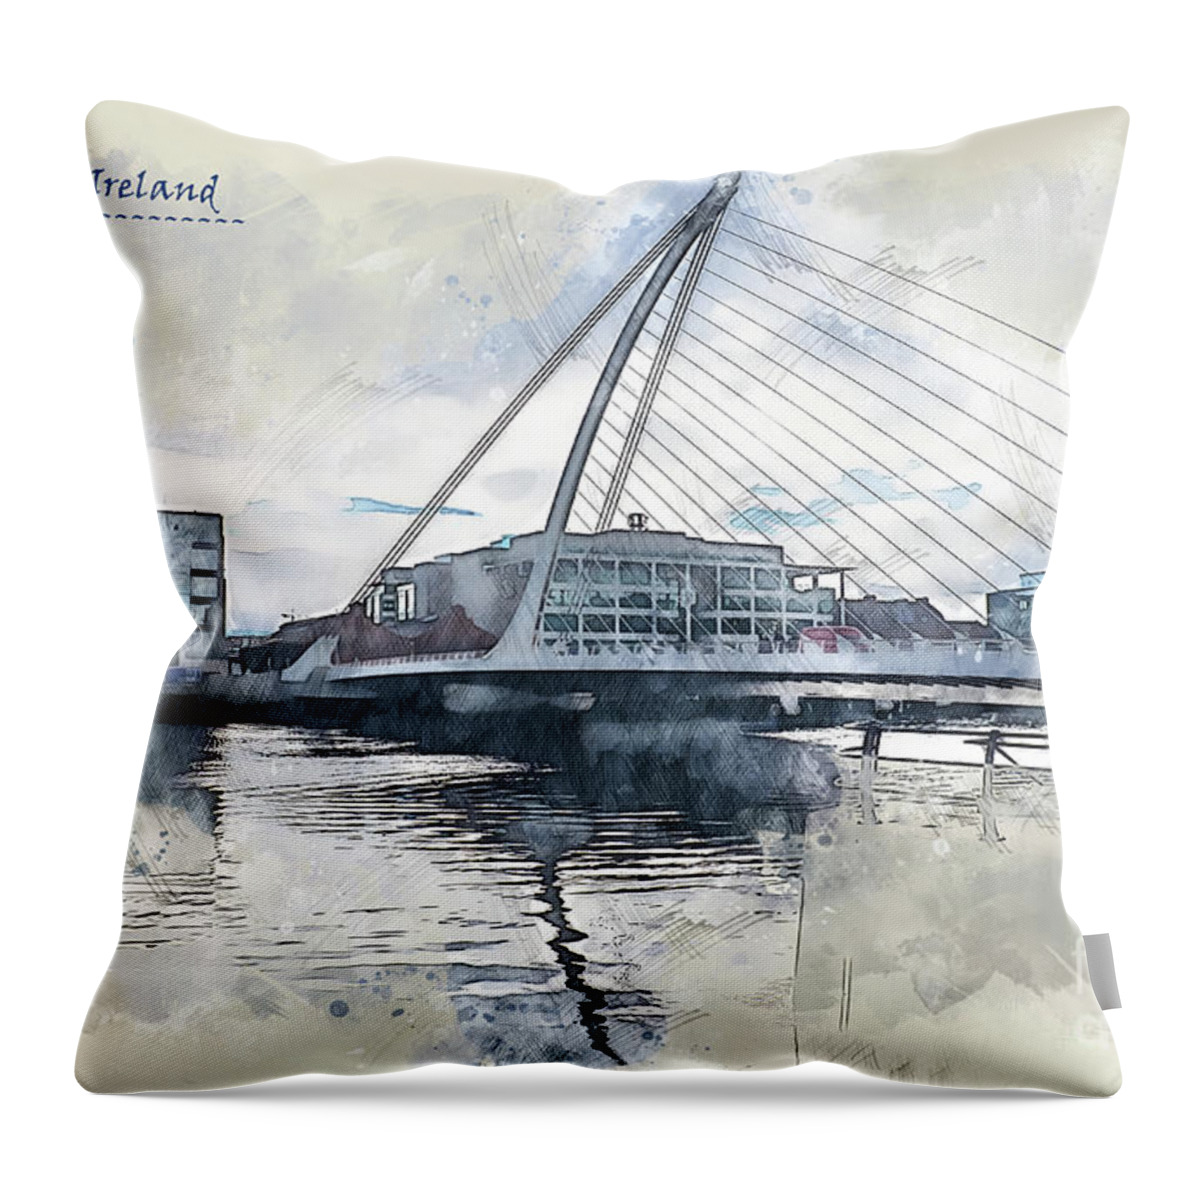 Artistic Throw Pillow featuring the digital art Dublin sketch #1 by Ariadna De Raadt